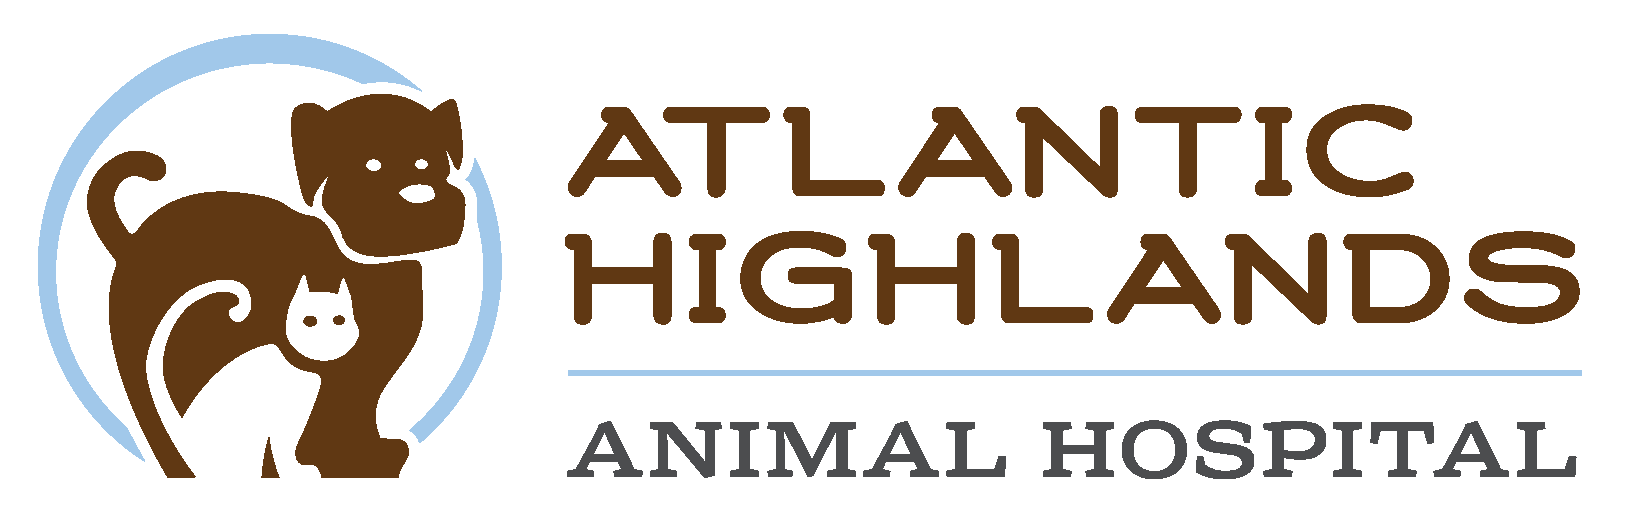 Atlantic Highlands Animal Hospital